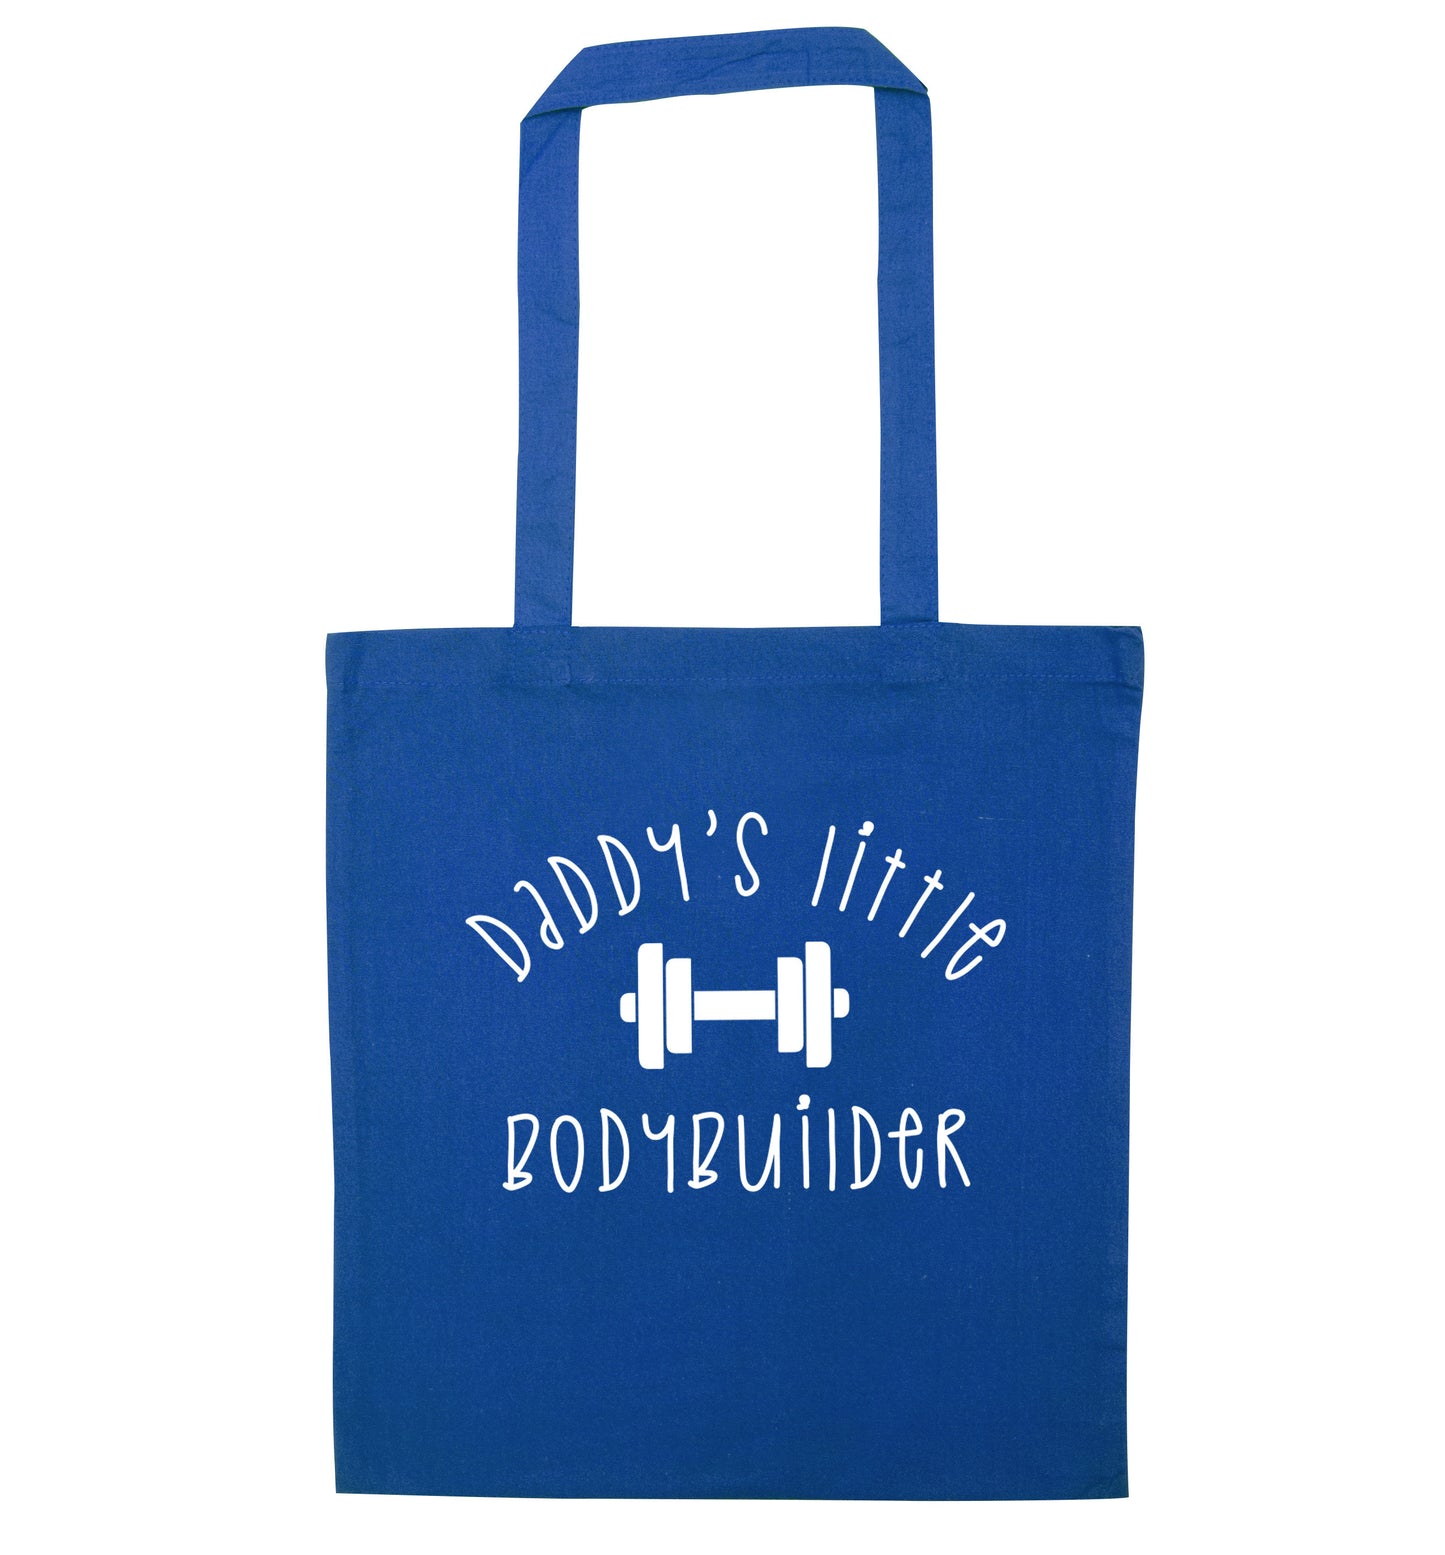 Daddy's little bodybuilder blue tote bag